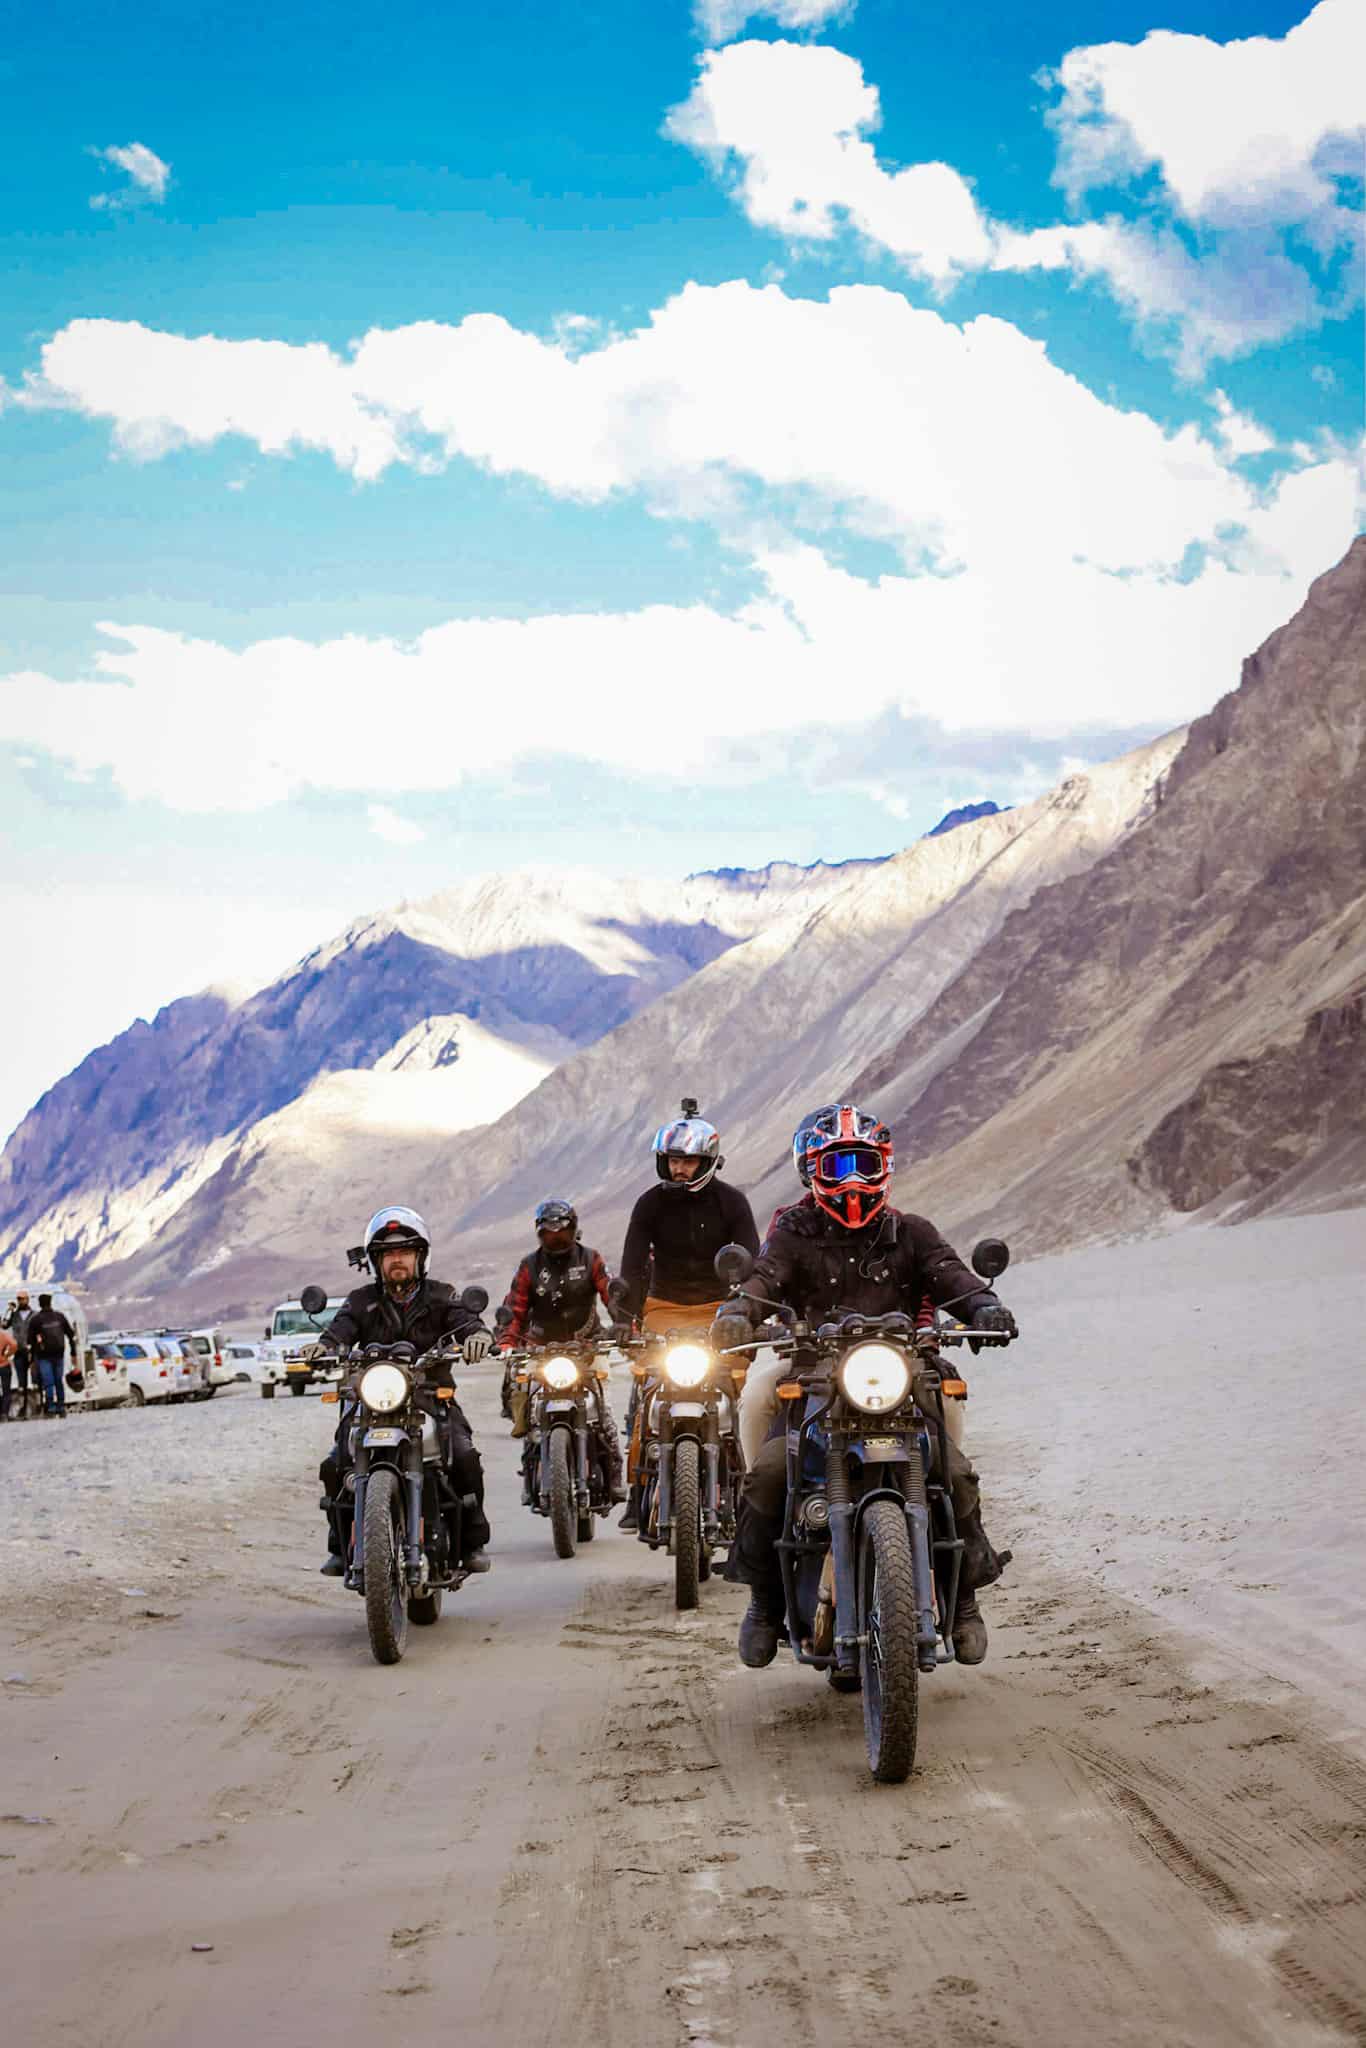 11 Days Delhi To Leh Ladakh Motorbike Tour in Indian Himalayas